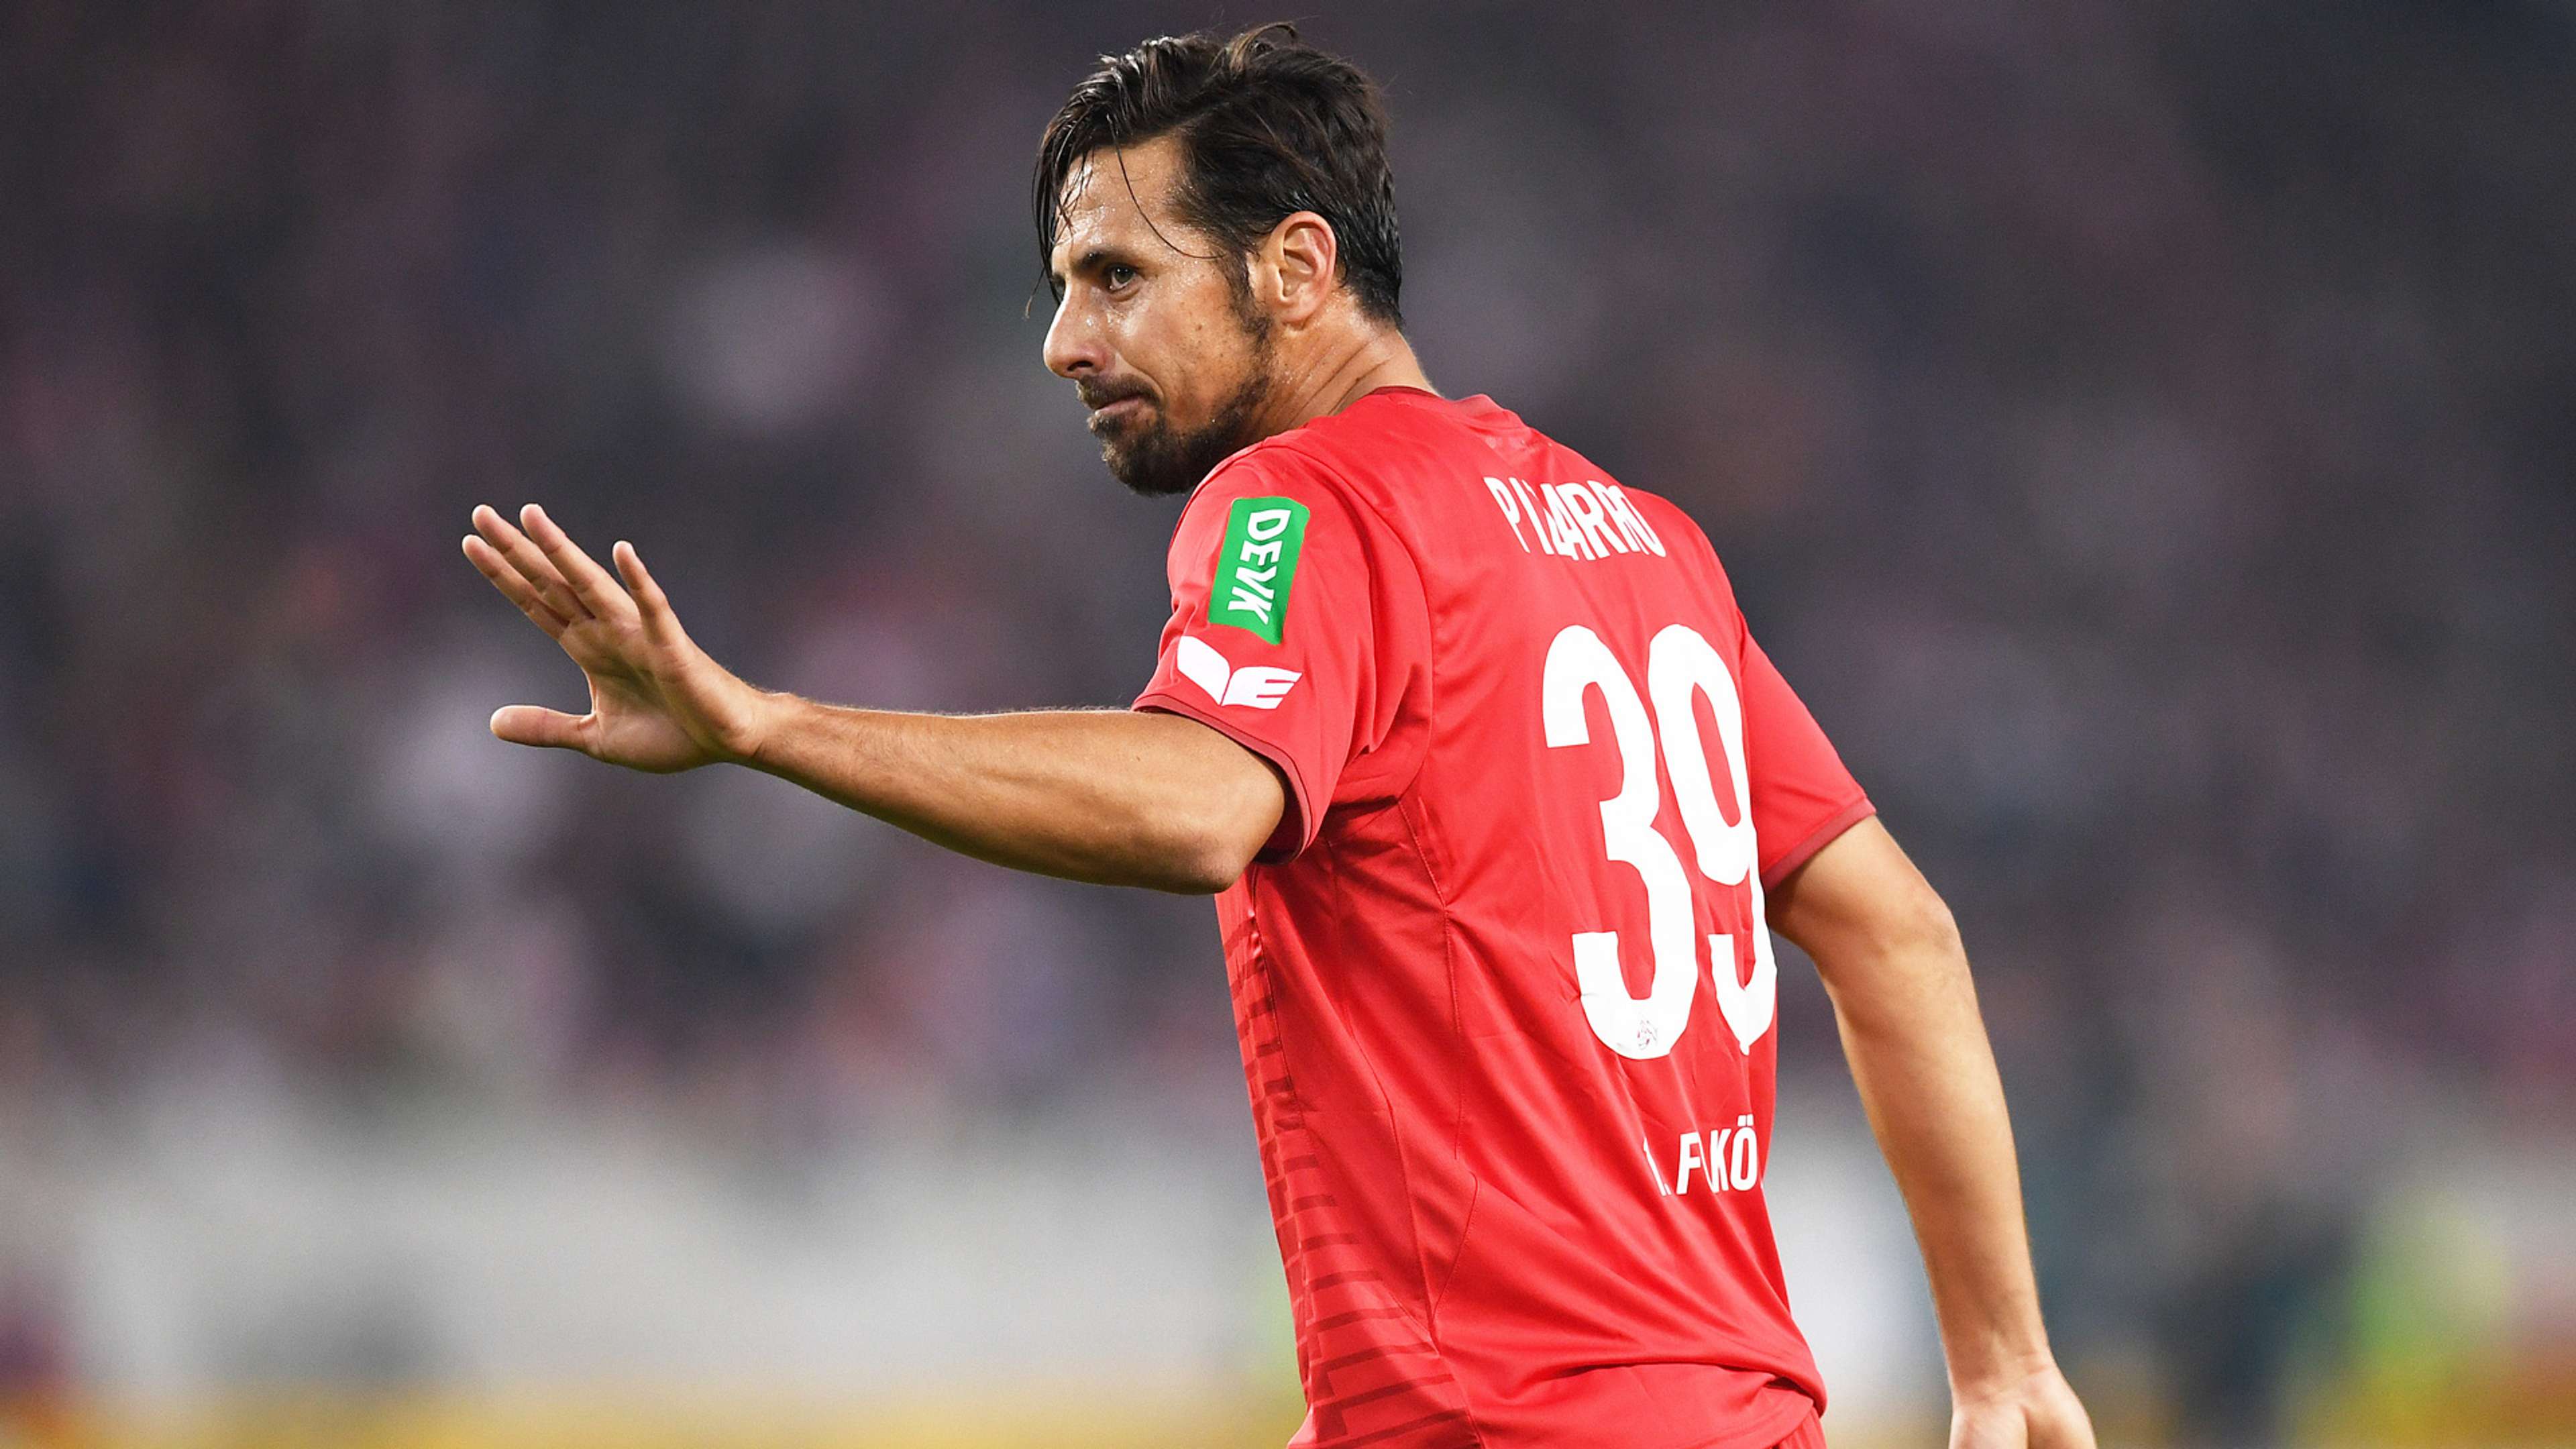 Claudio Pizarro VfB Stuttgart 1 FC Köln 13102017